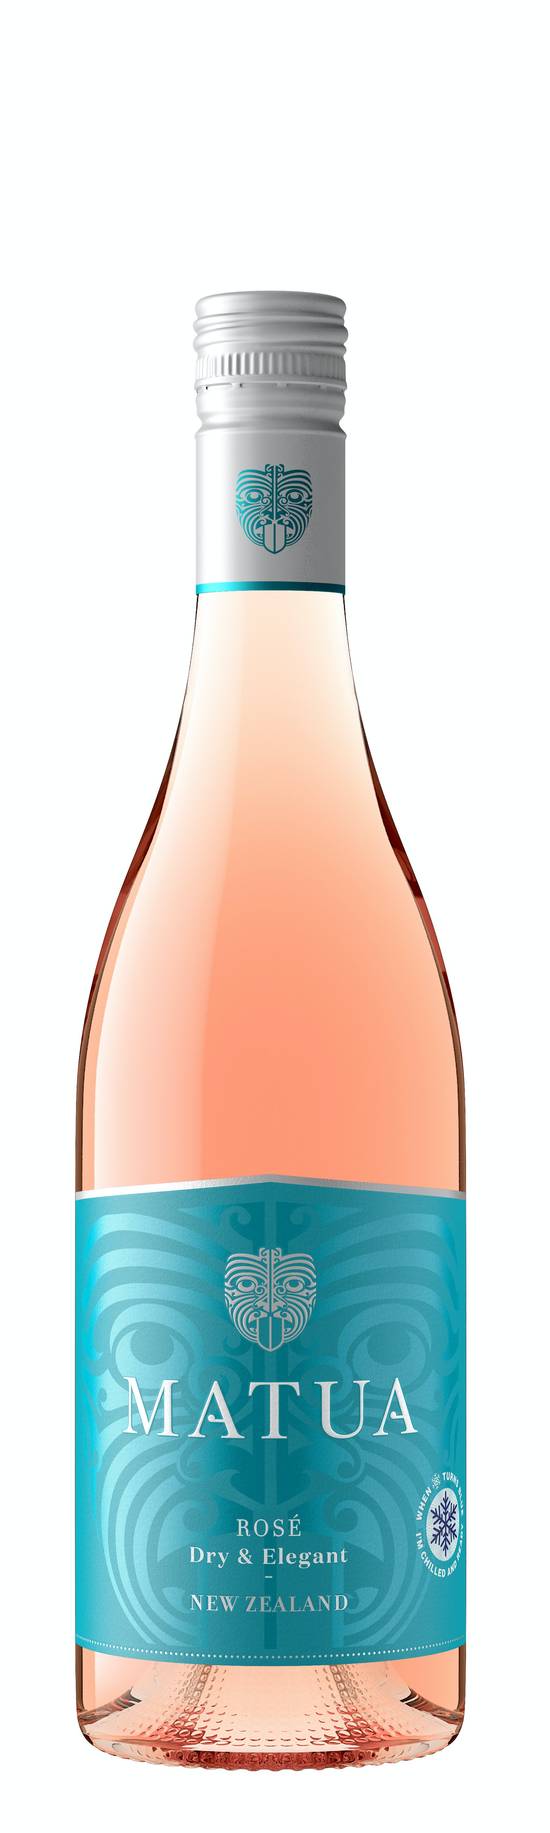 Matua Rose Wine, New Zealand 2020 (750 ml)